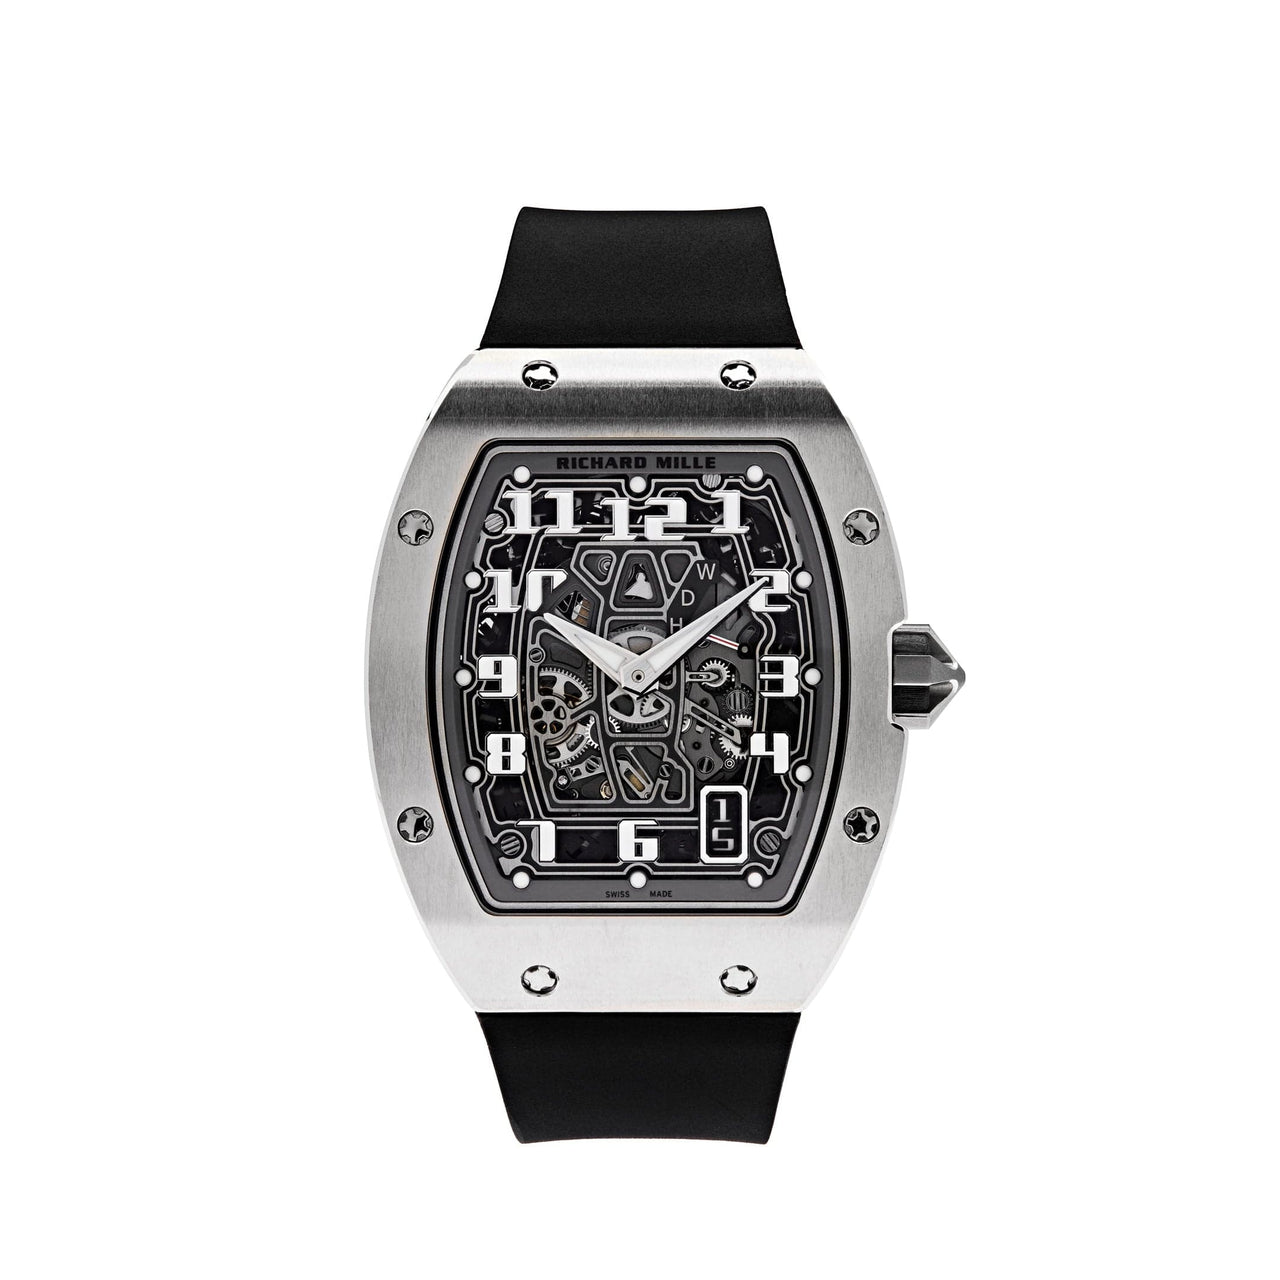 Luxury Watch Richard Mille Titanium RM67-01 Wrist Aficionado